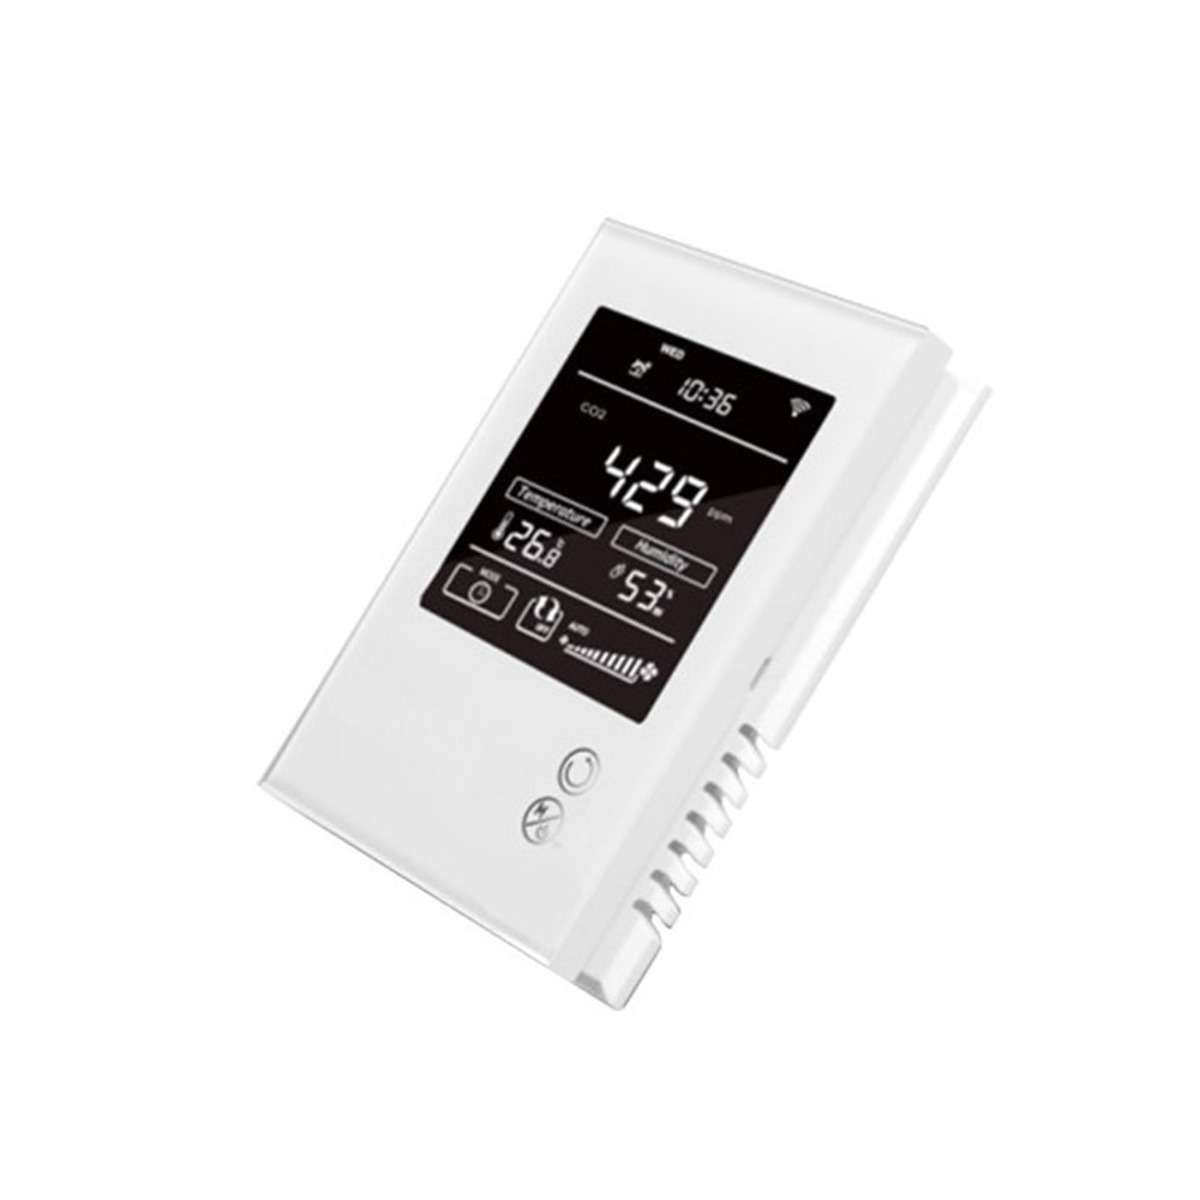 MCO HOME CO2-, Weiß Feuchtigkeitssensor Sensor - HOME MCO MCOEMH9-CO2 Temperatur- und 12VDC